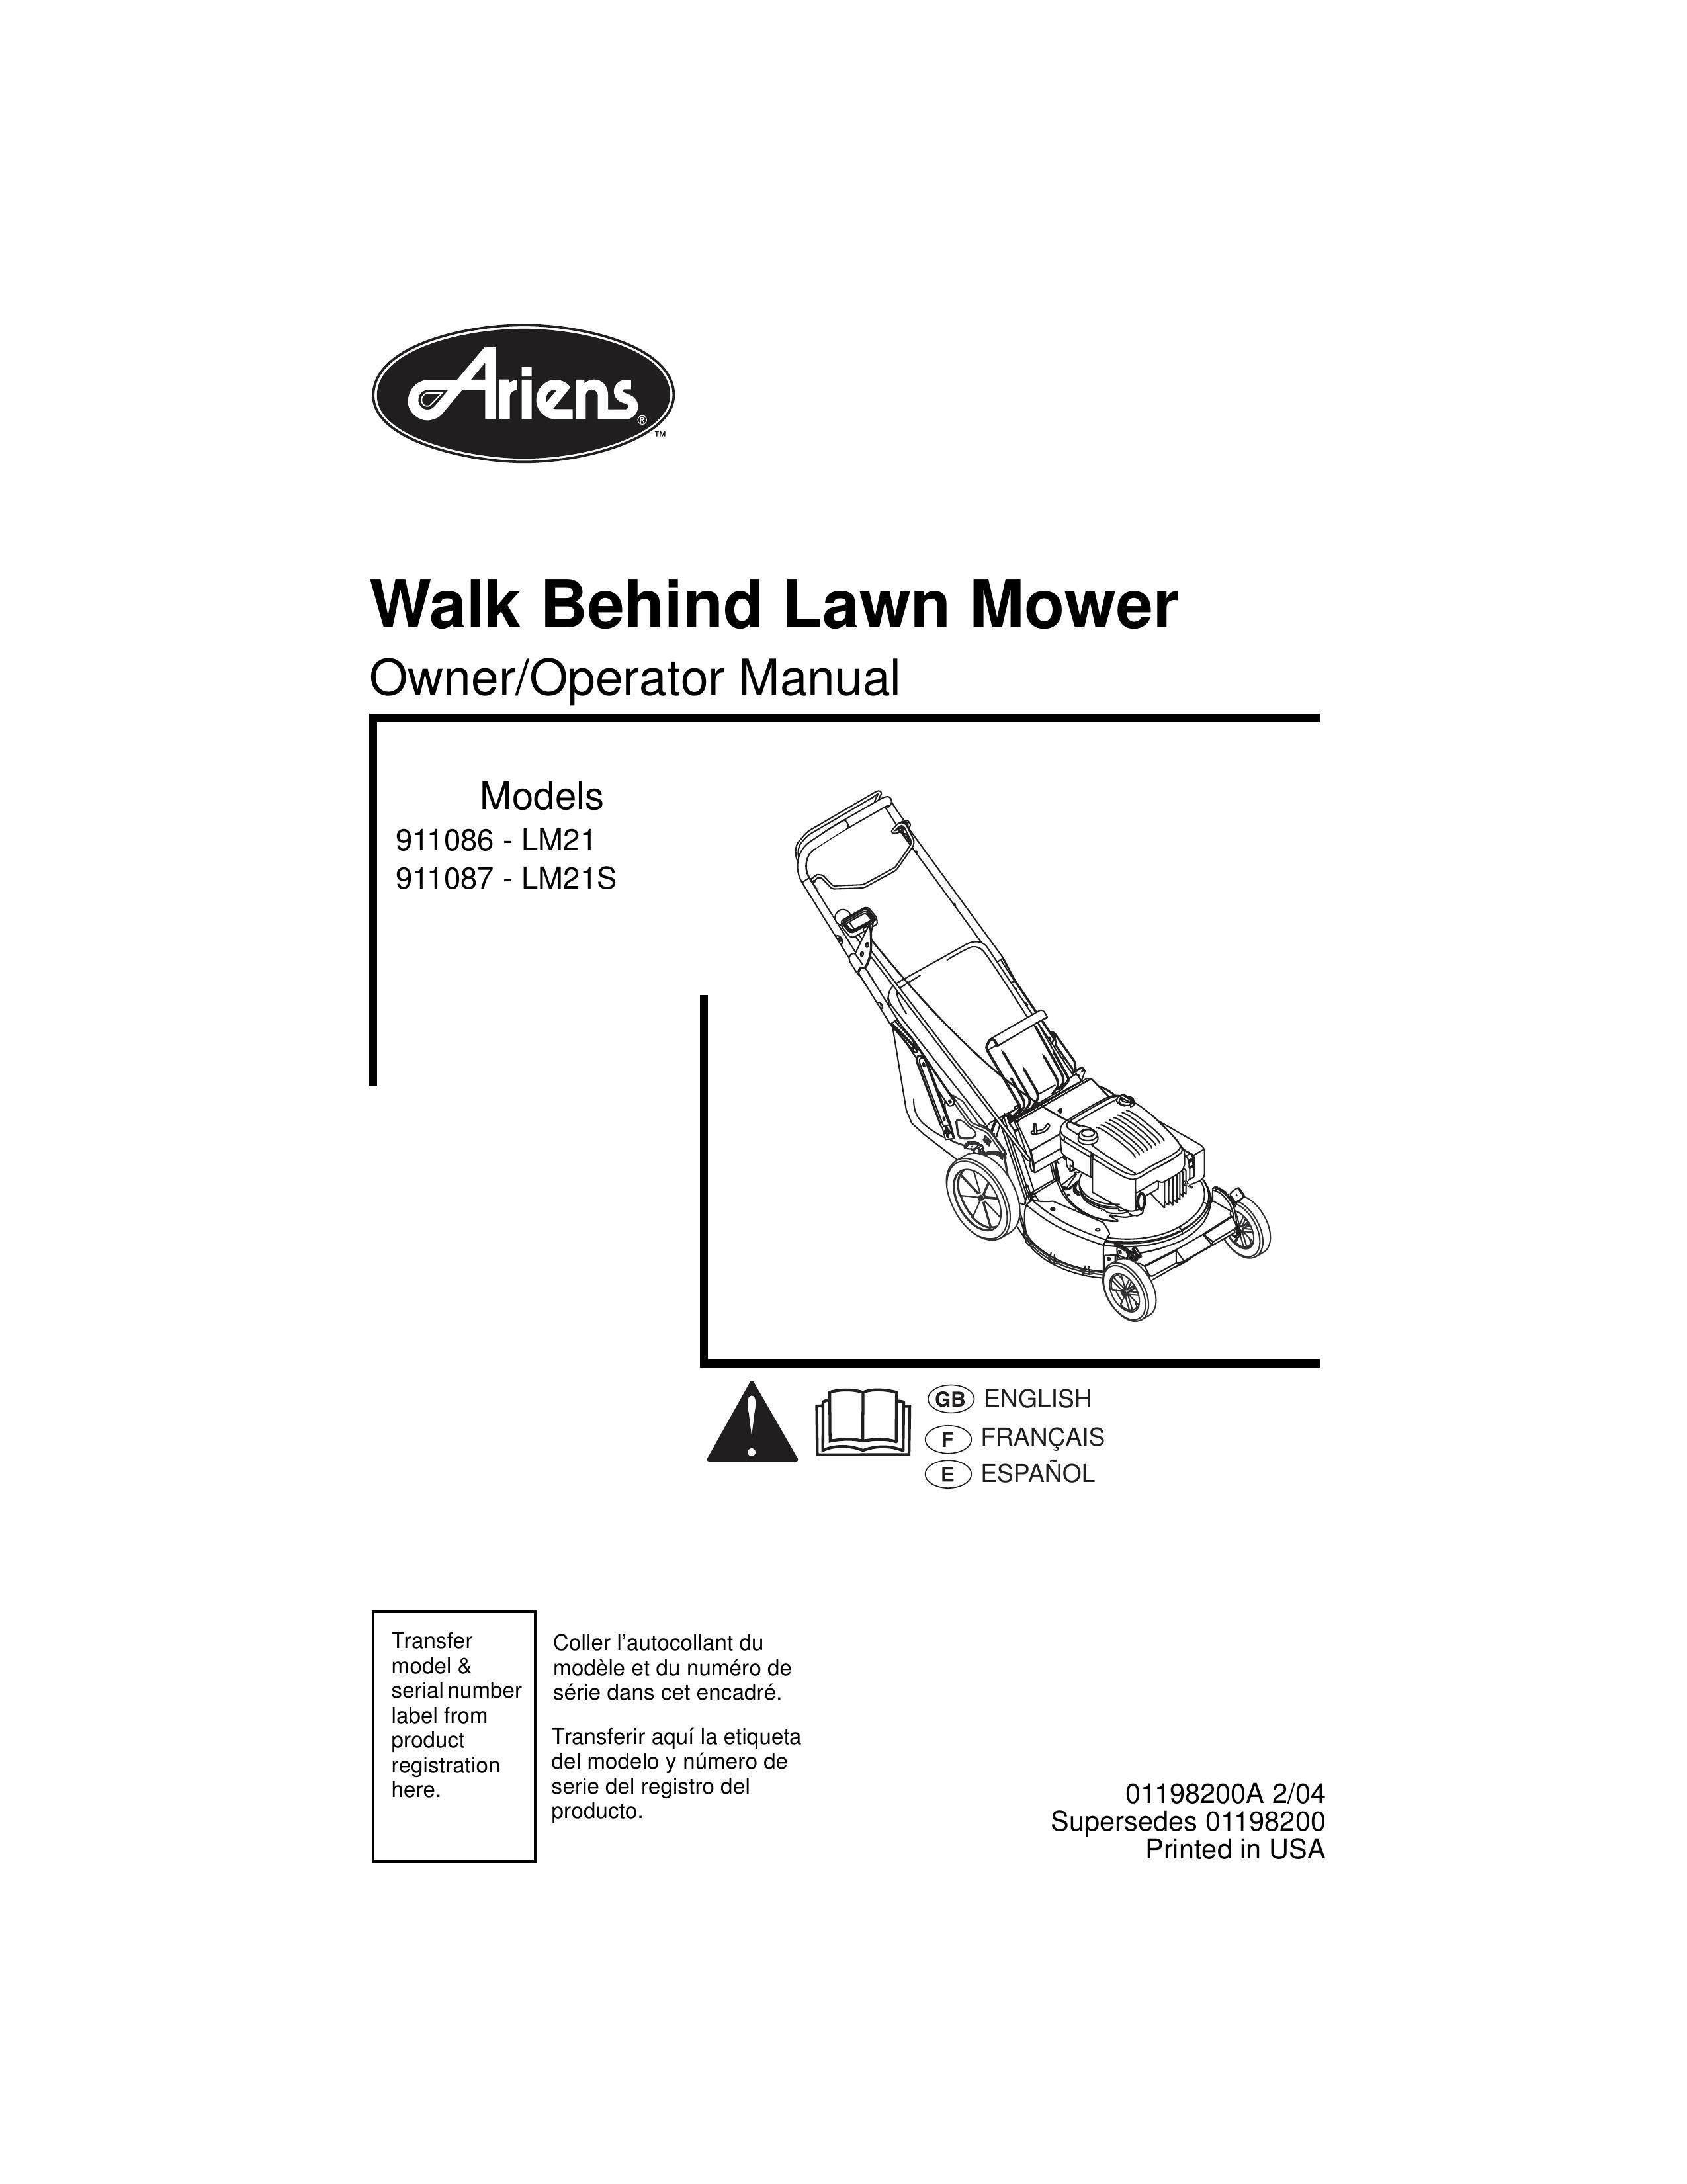 Ariens 911086 - LM21, 911087 - LM21S Lawn Mower User Manual